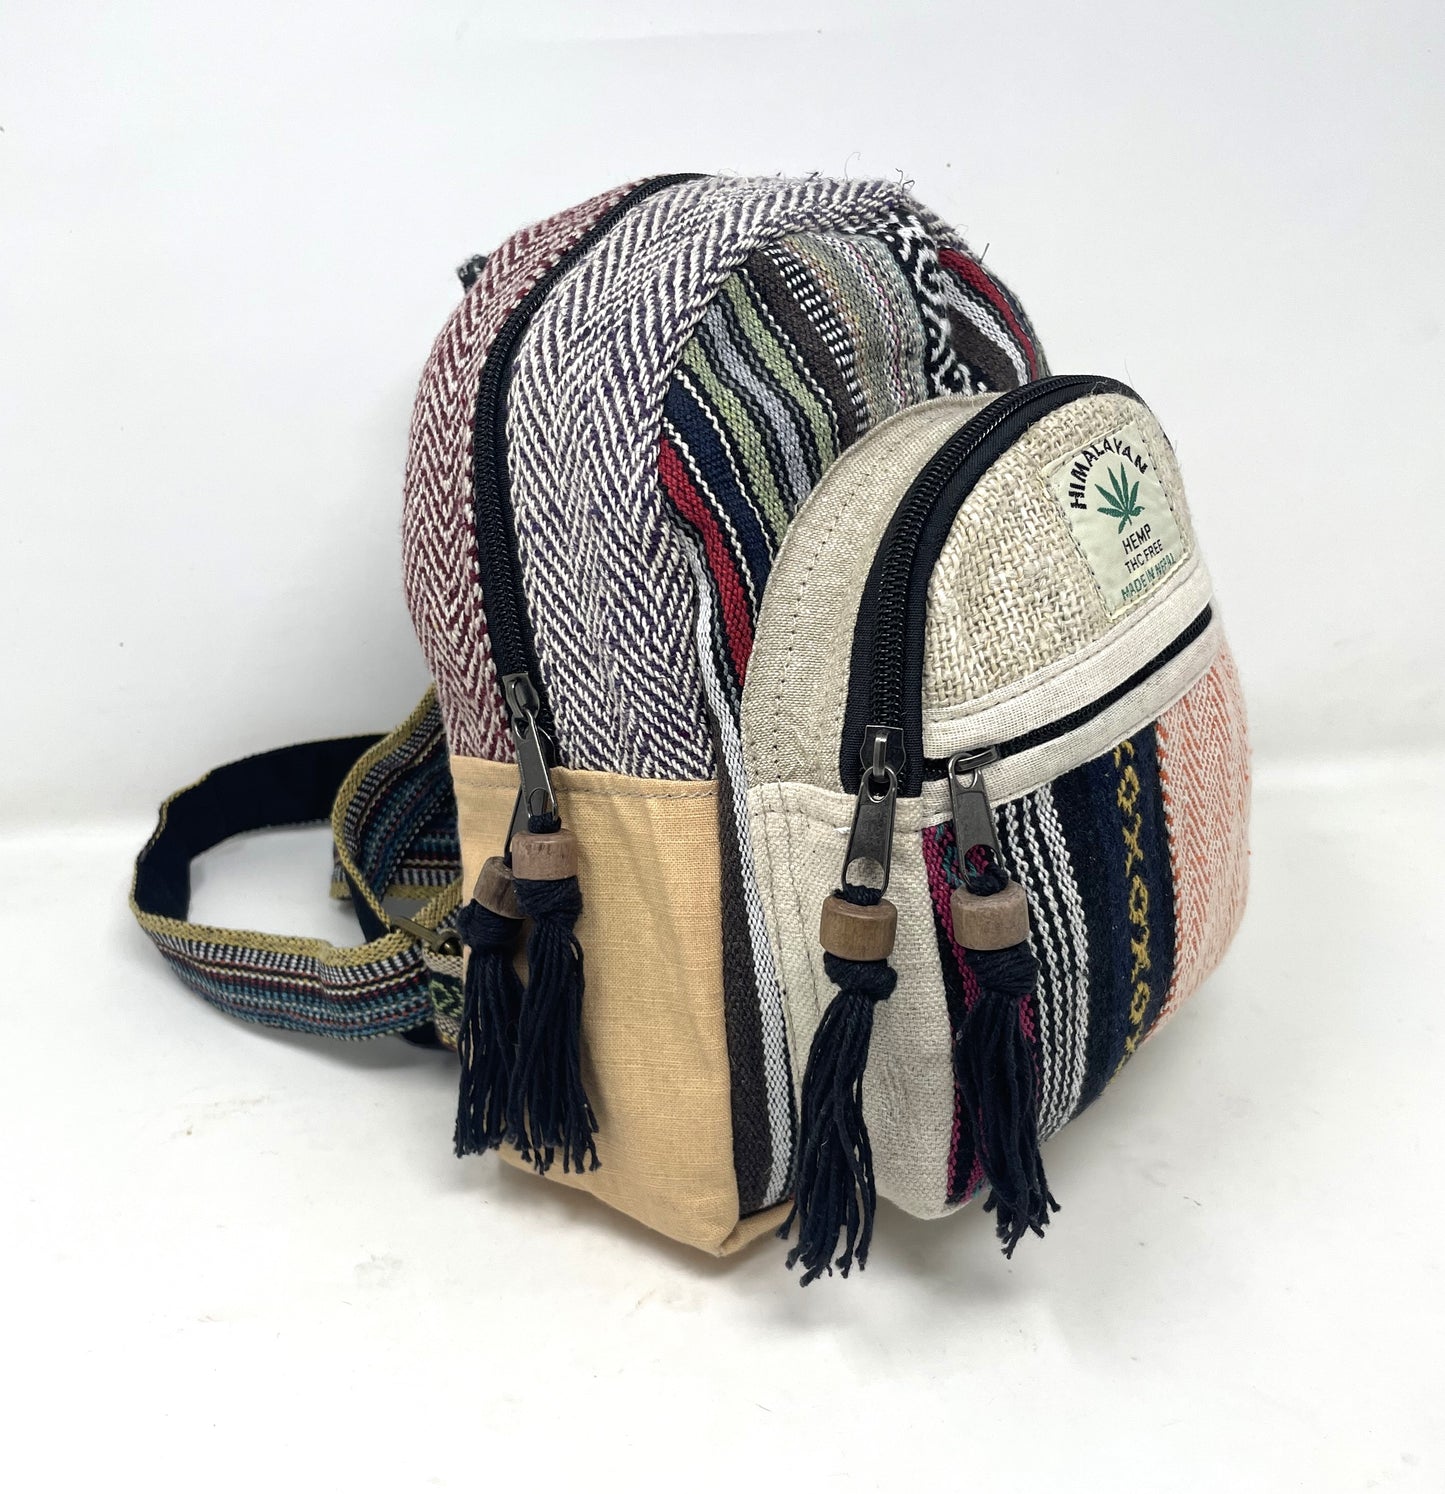 Himalayan Pure Hemp Mini Backpack with Passels